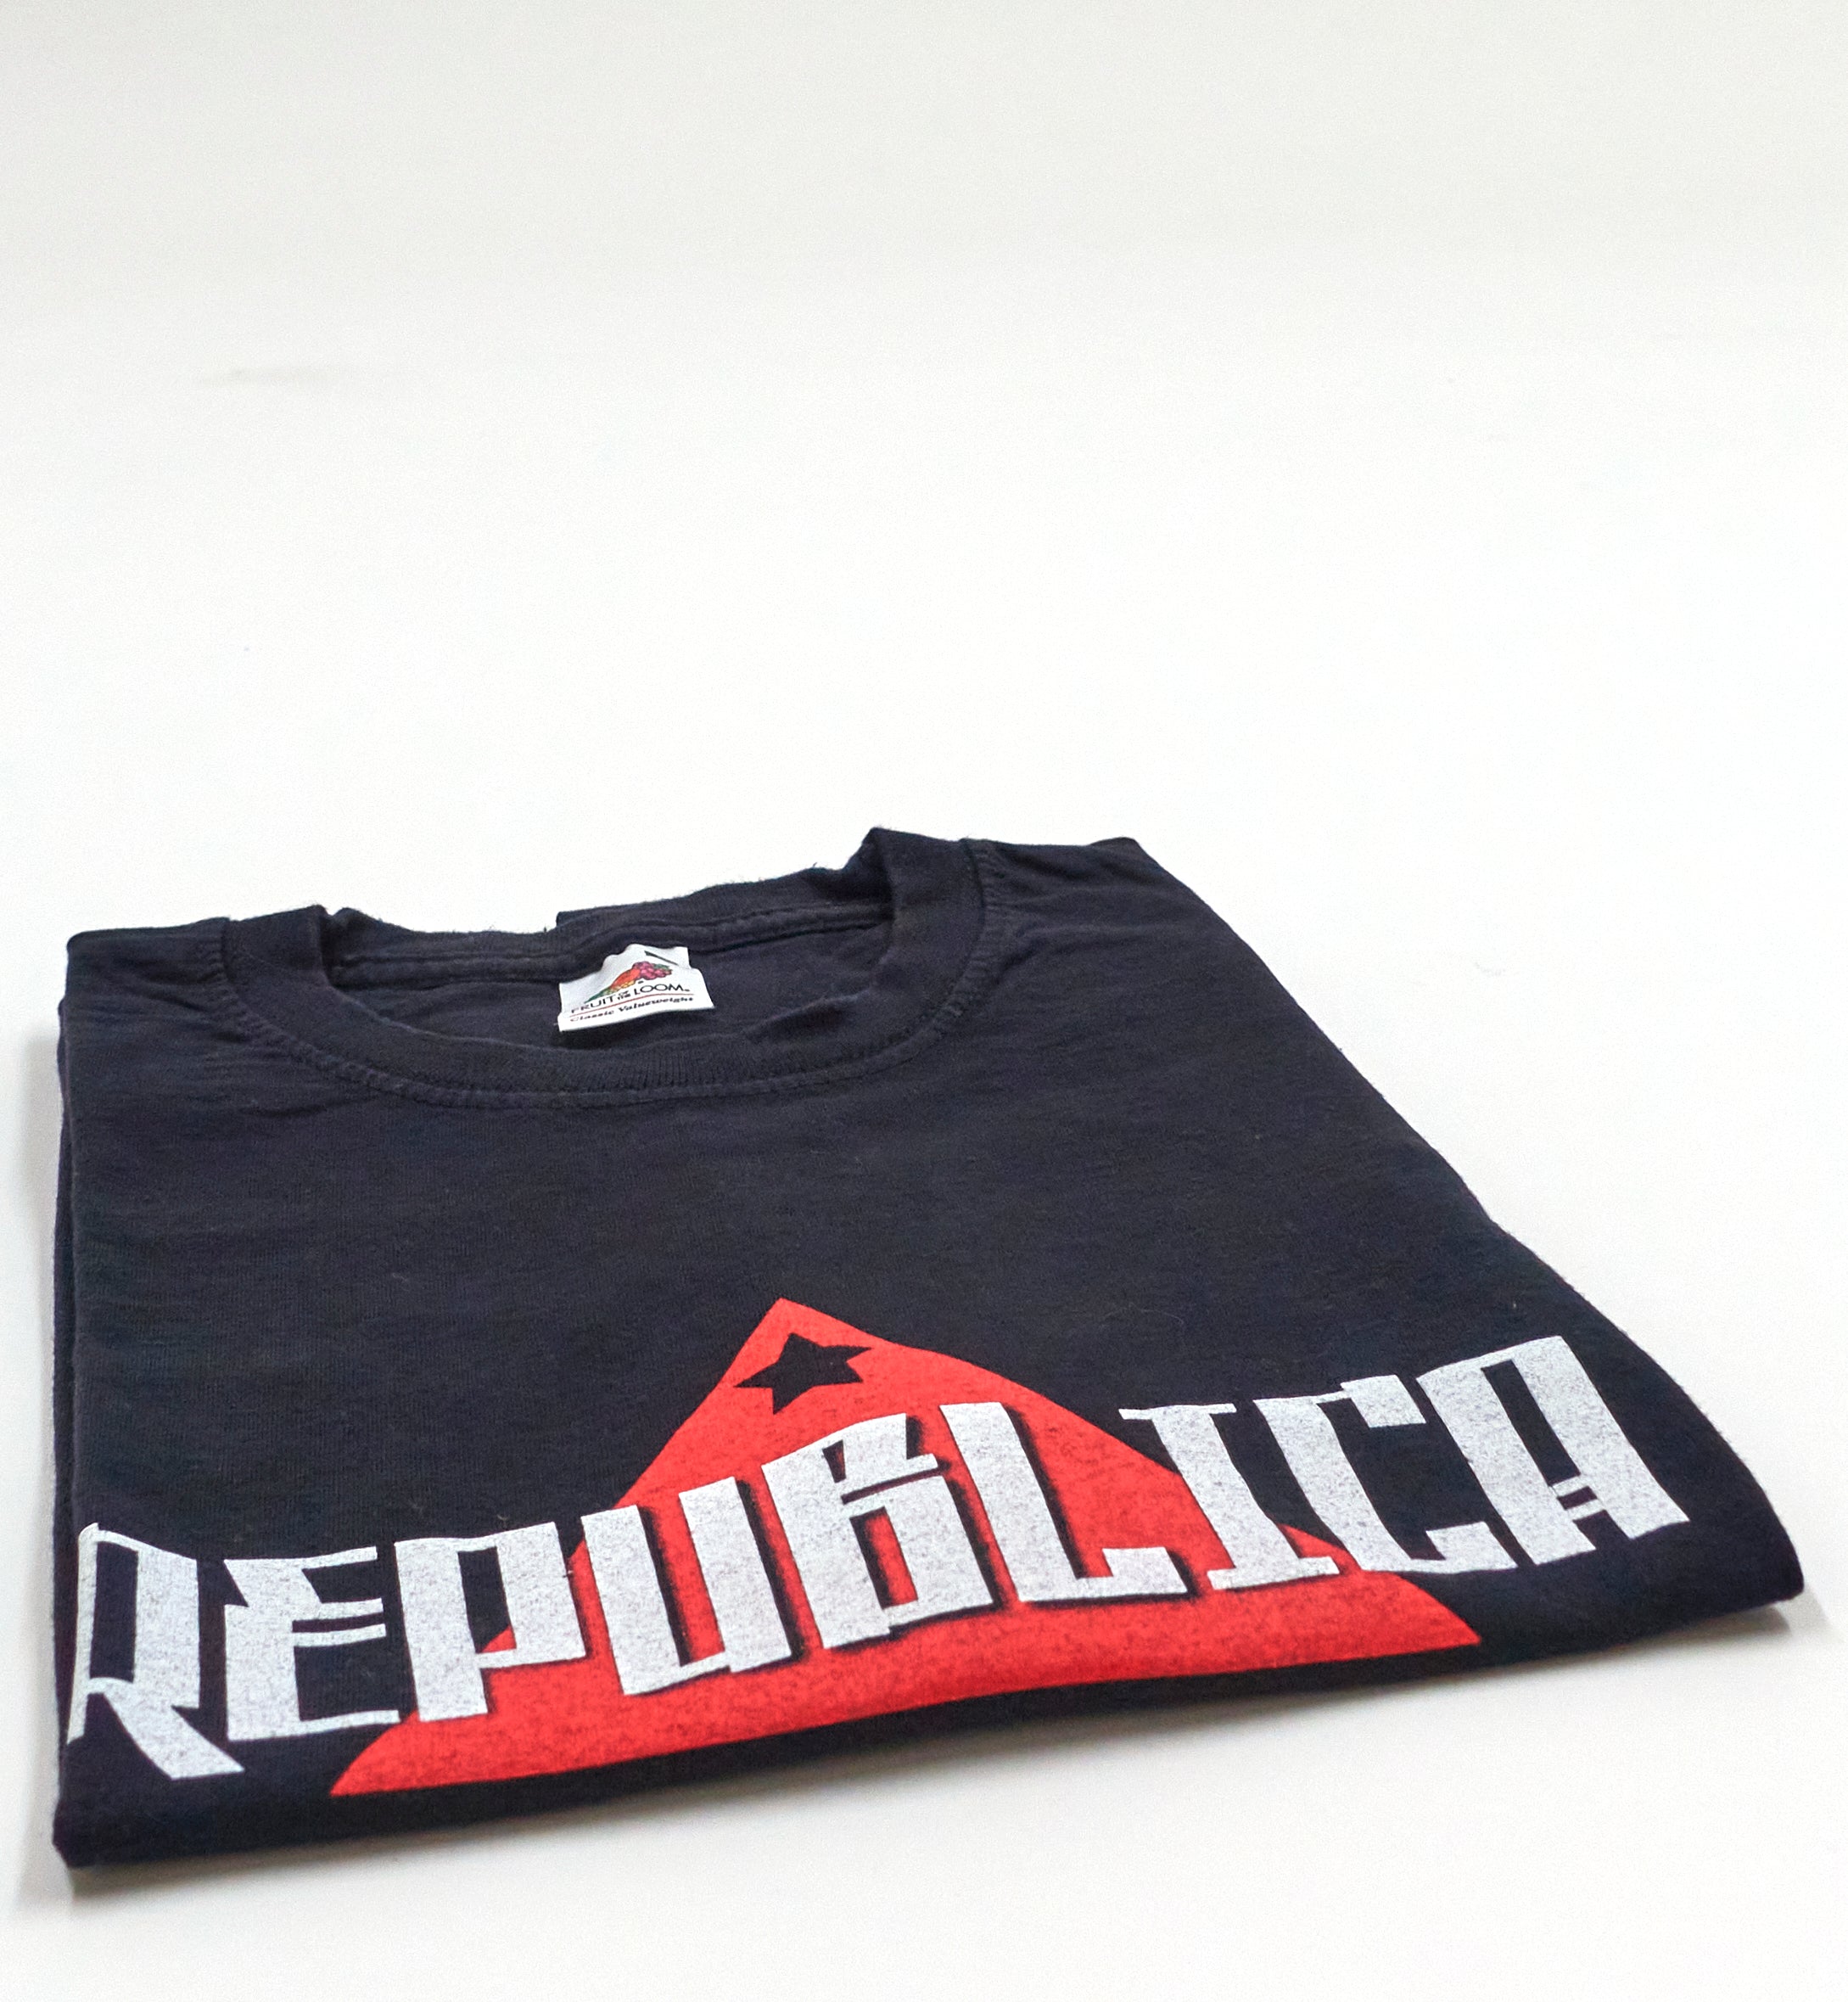 Republica – Republica 1990's Tour Shirt Size Medium